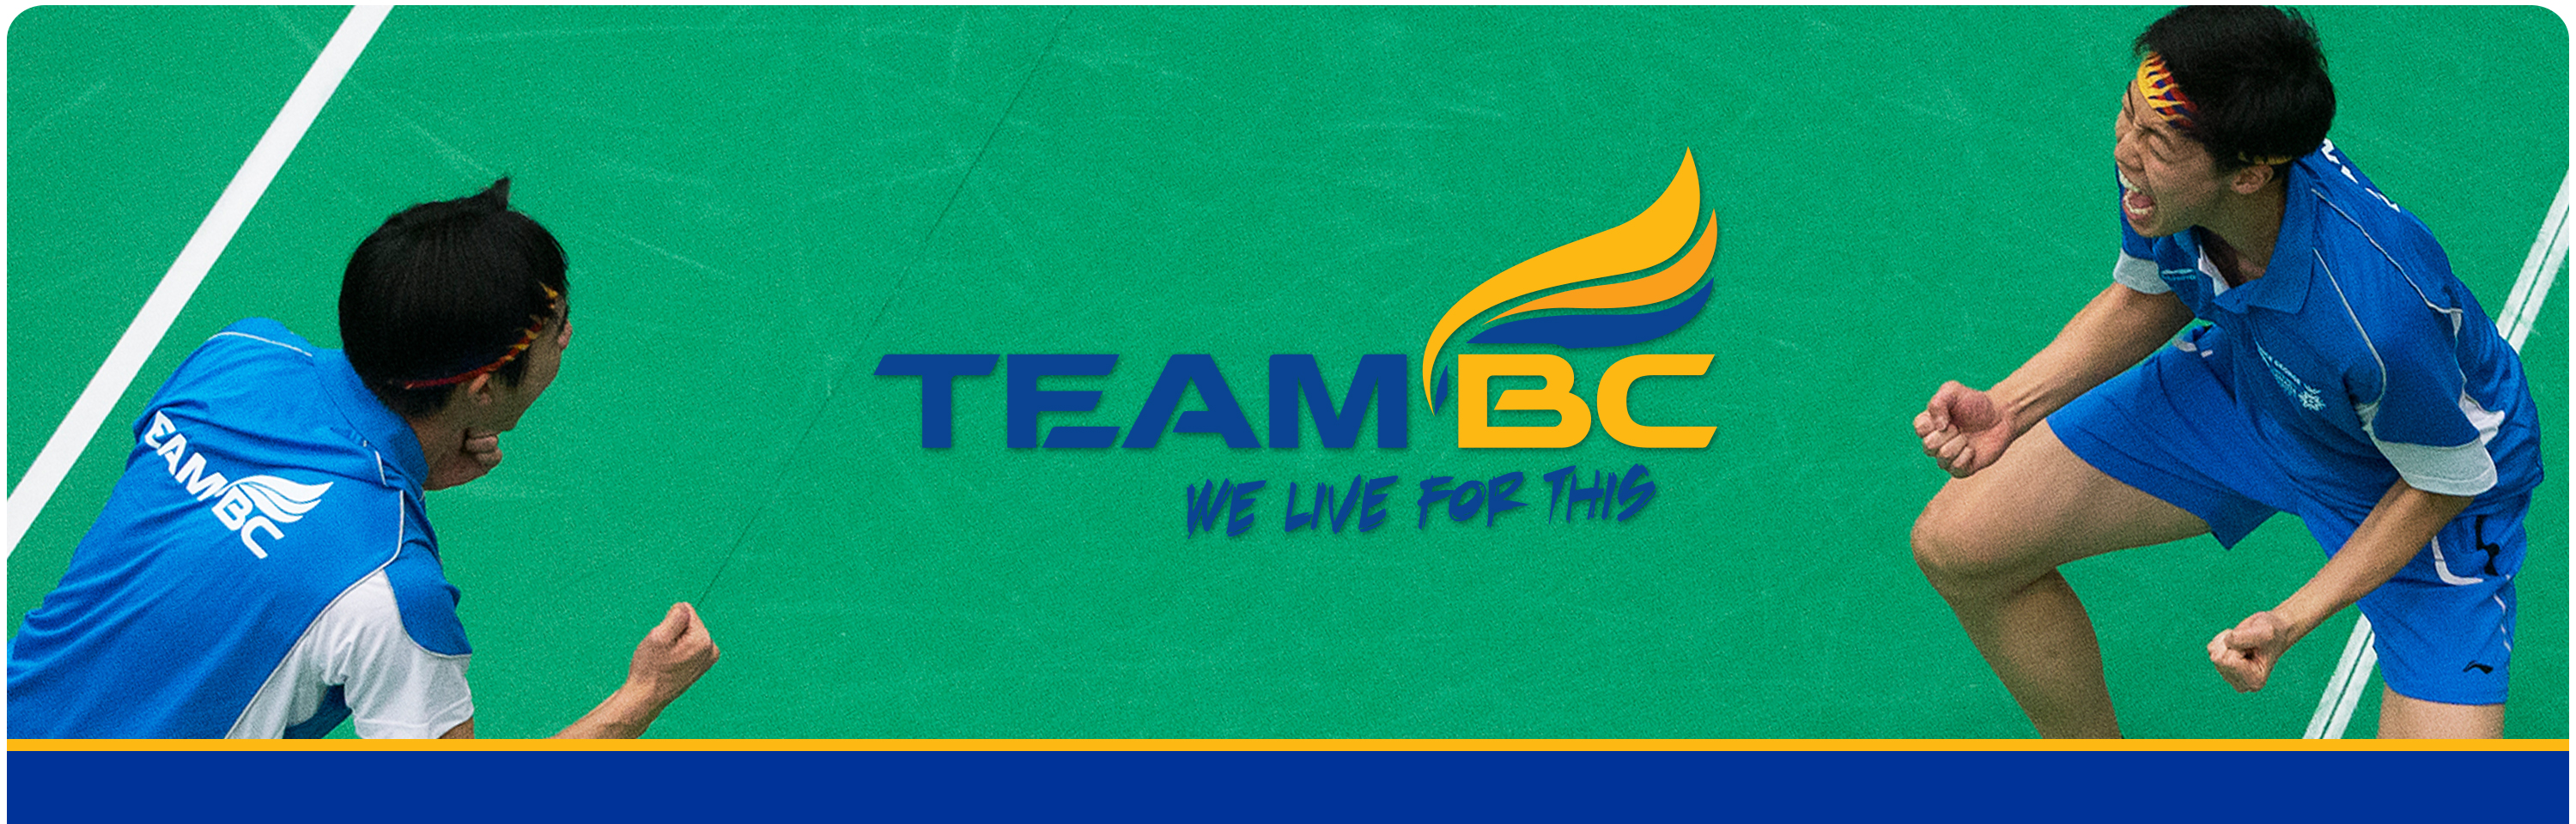 Team BC Newsletter Header